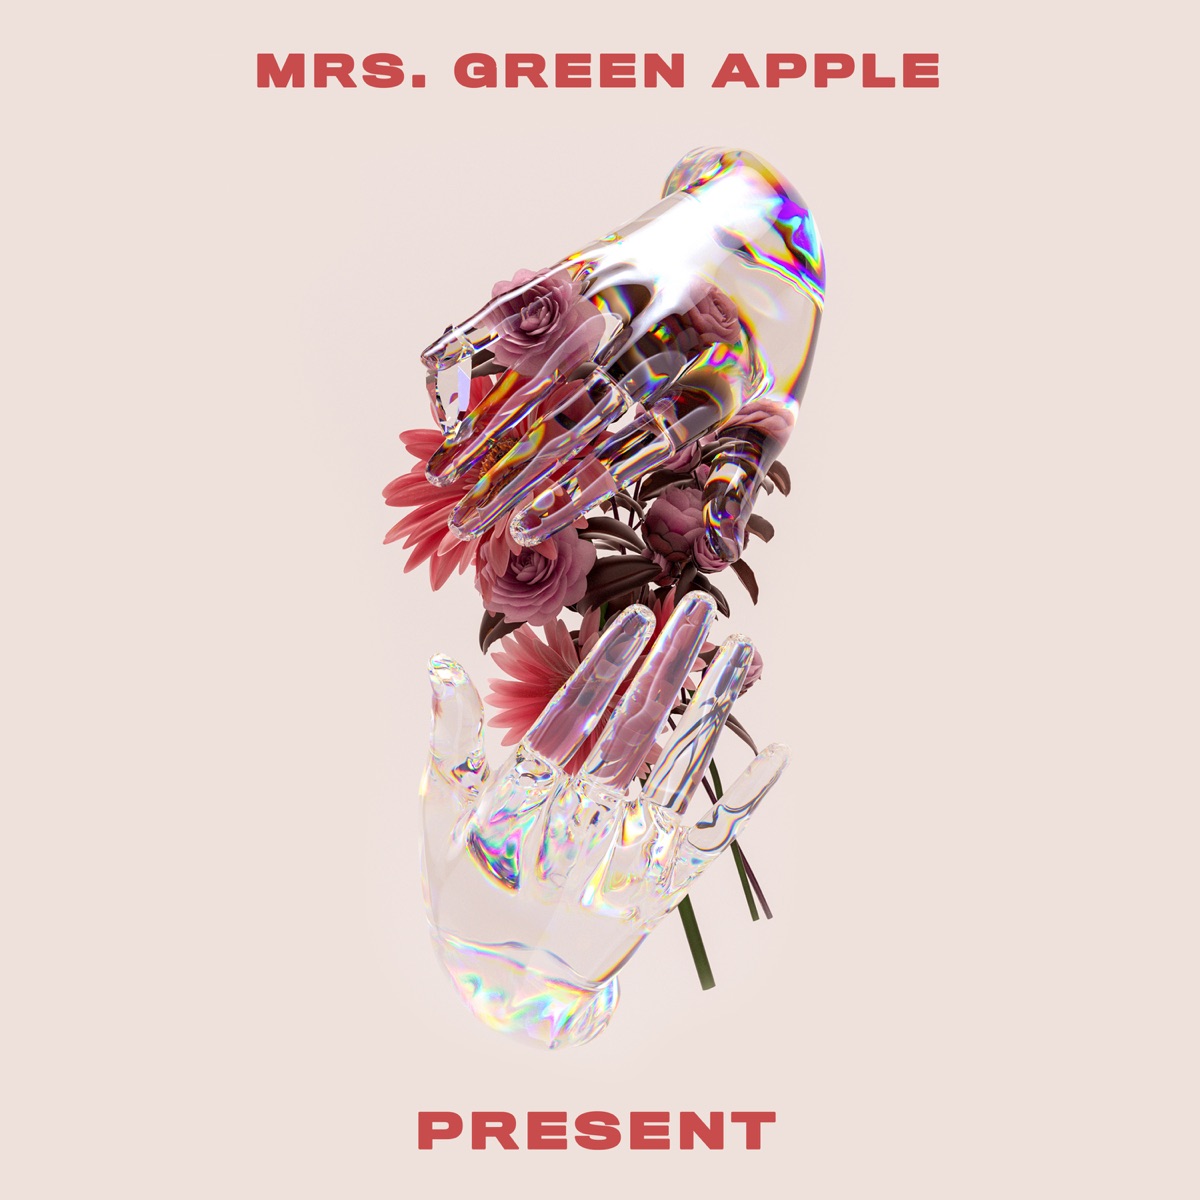 『Mrs. GREEN APPLE - PRESENT (English Ver.) 歌詞』収録の『PRESENT (English Ver.)』ジャケット